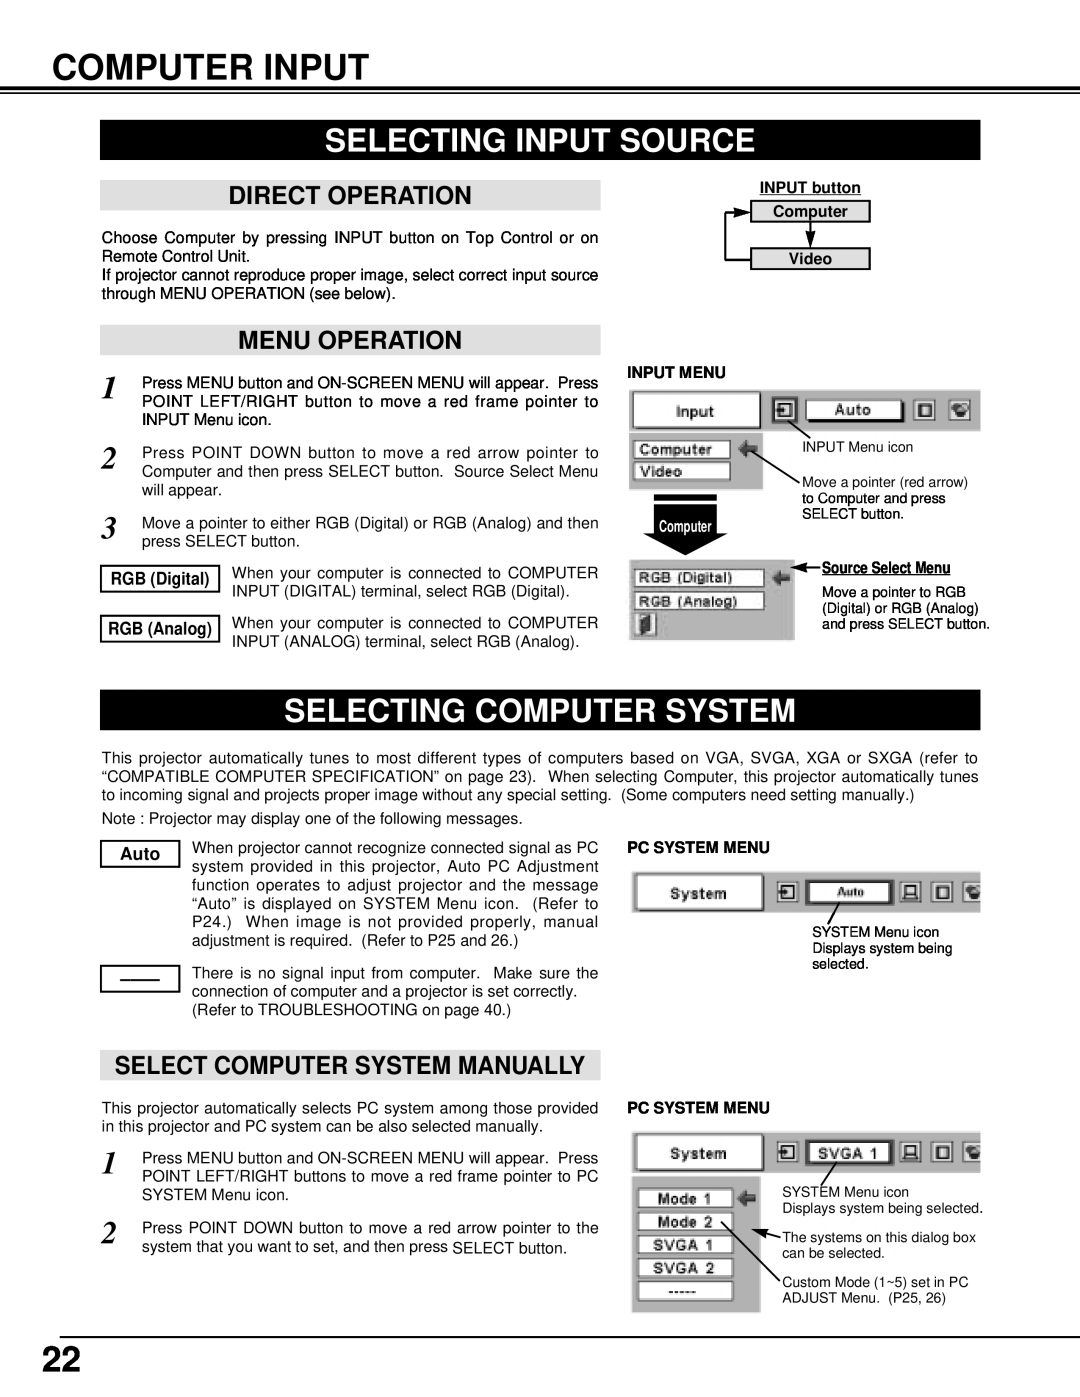 Eiki LC-NB3W Computer Input, Selecting Input Source, Selecting Computer System, Select Computer System Manually 